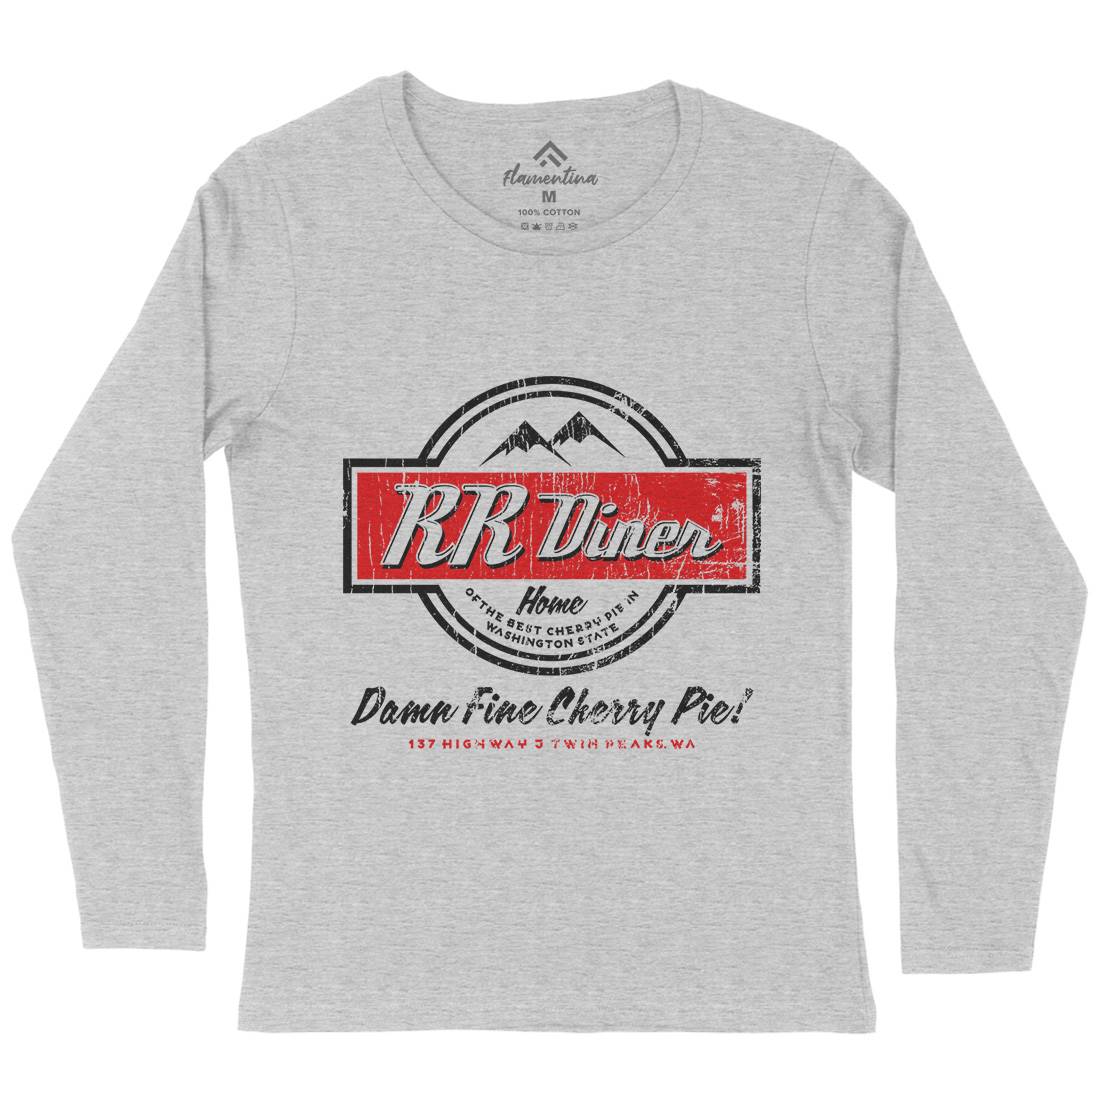 Double Rr Diner Womens Long Sleeve T-Shirt Horror D335